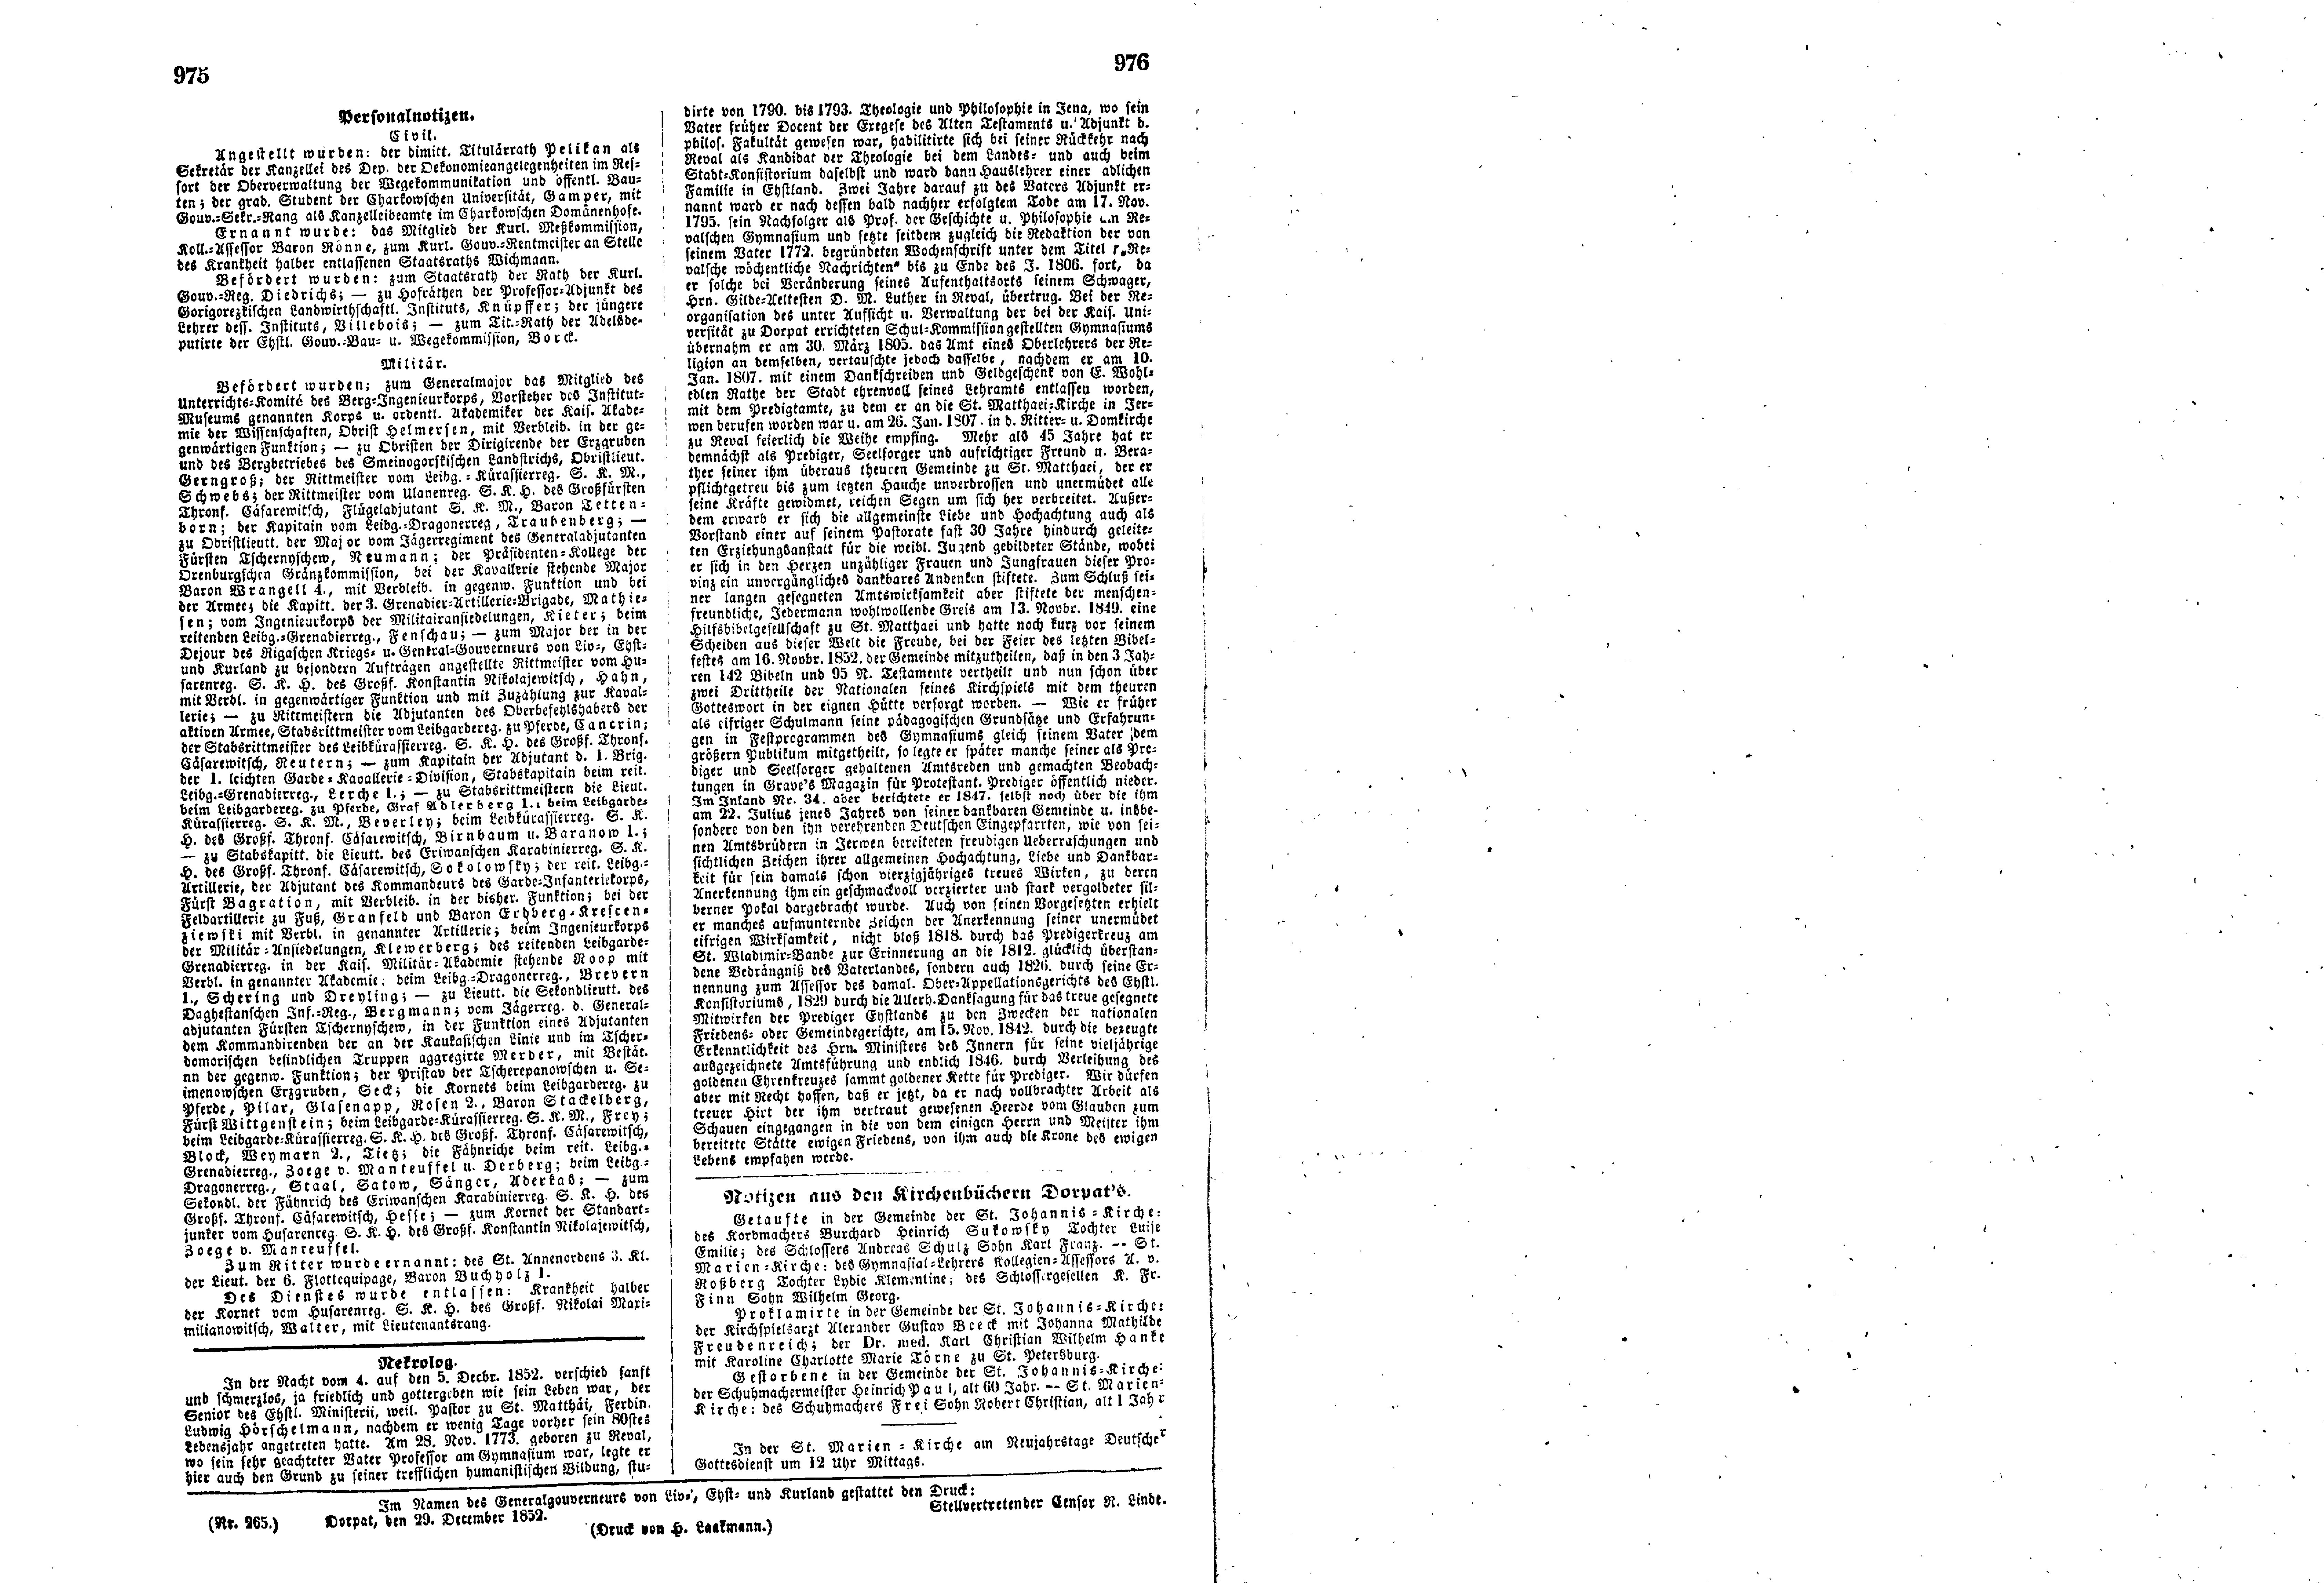 Das Inland [17] (1852) | 249. (975) Main body of text